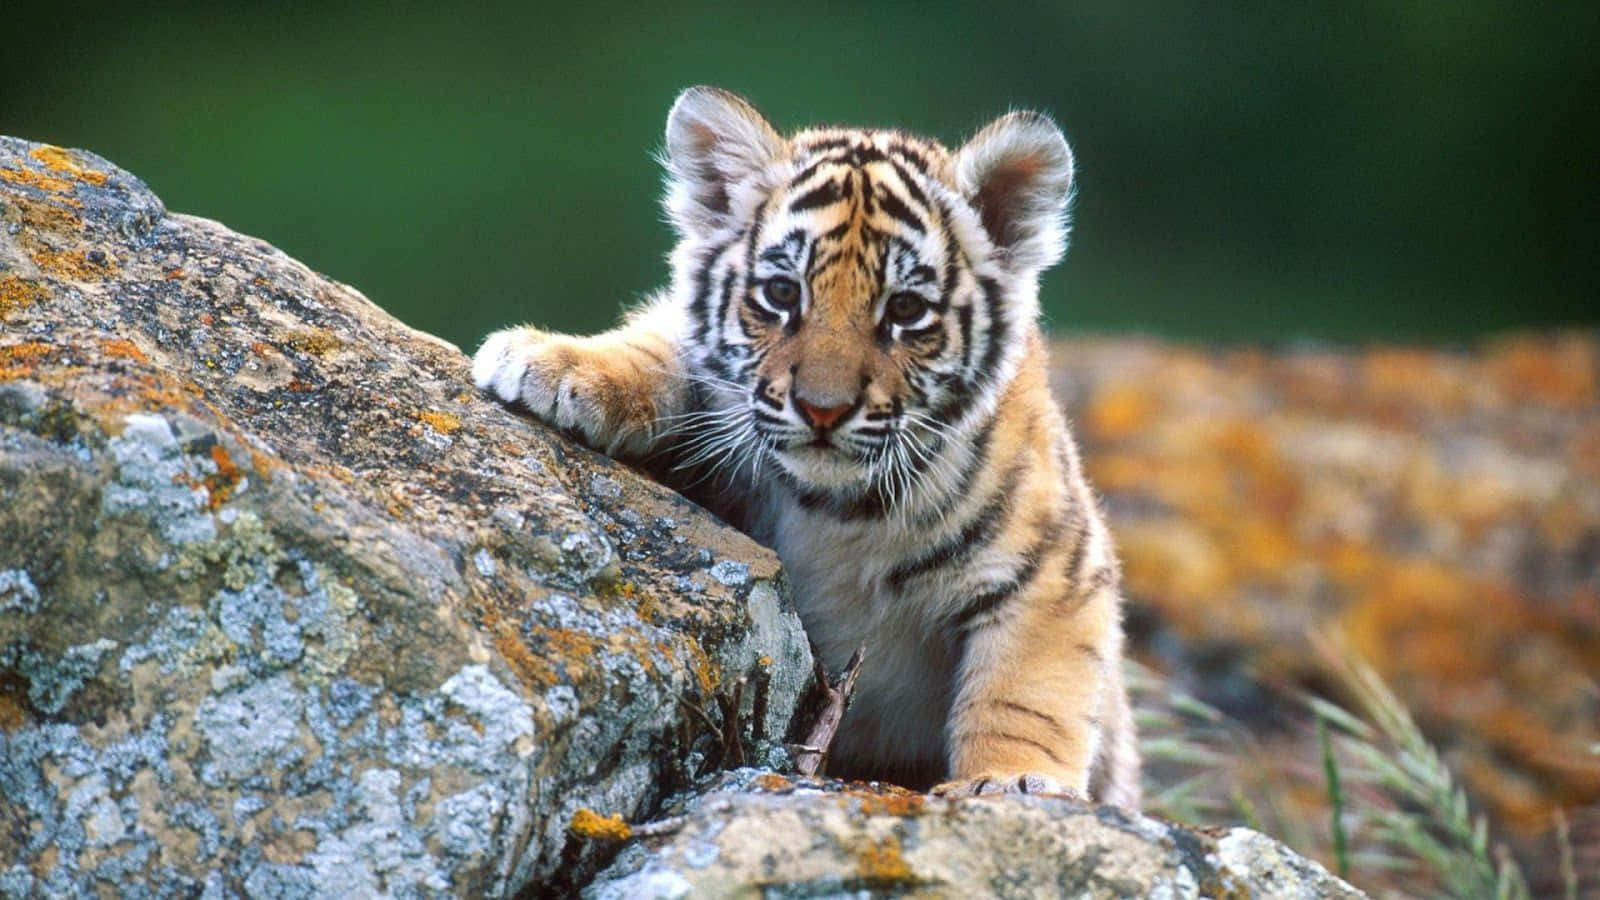 A Tiger Cub Is Sitting On A Rock